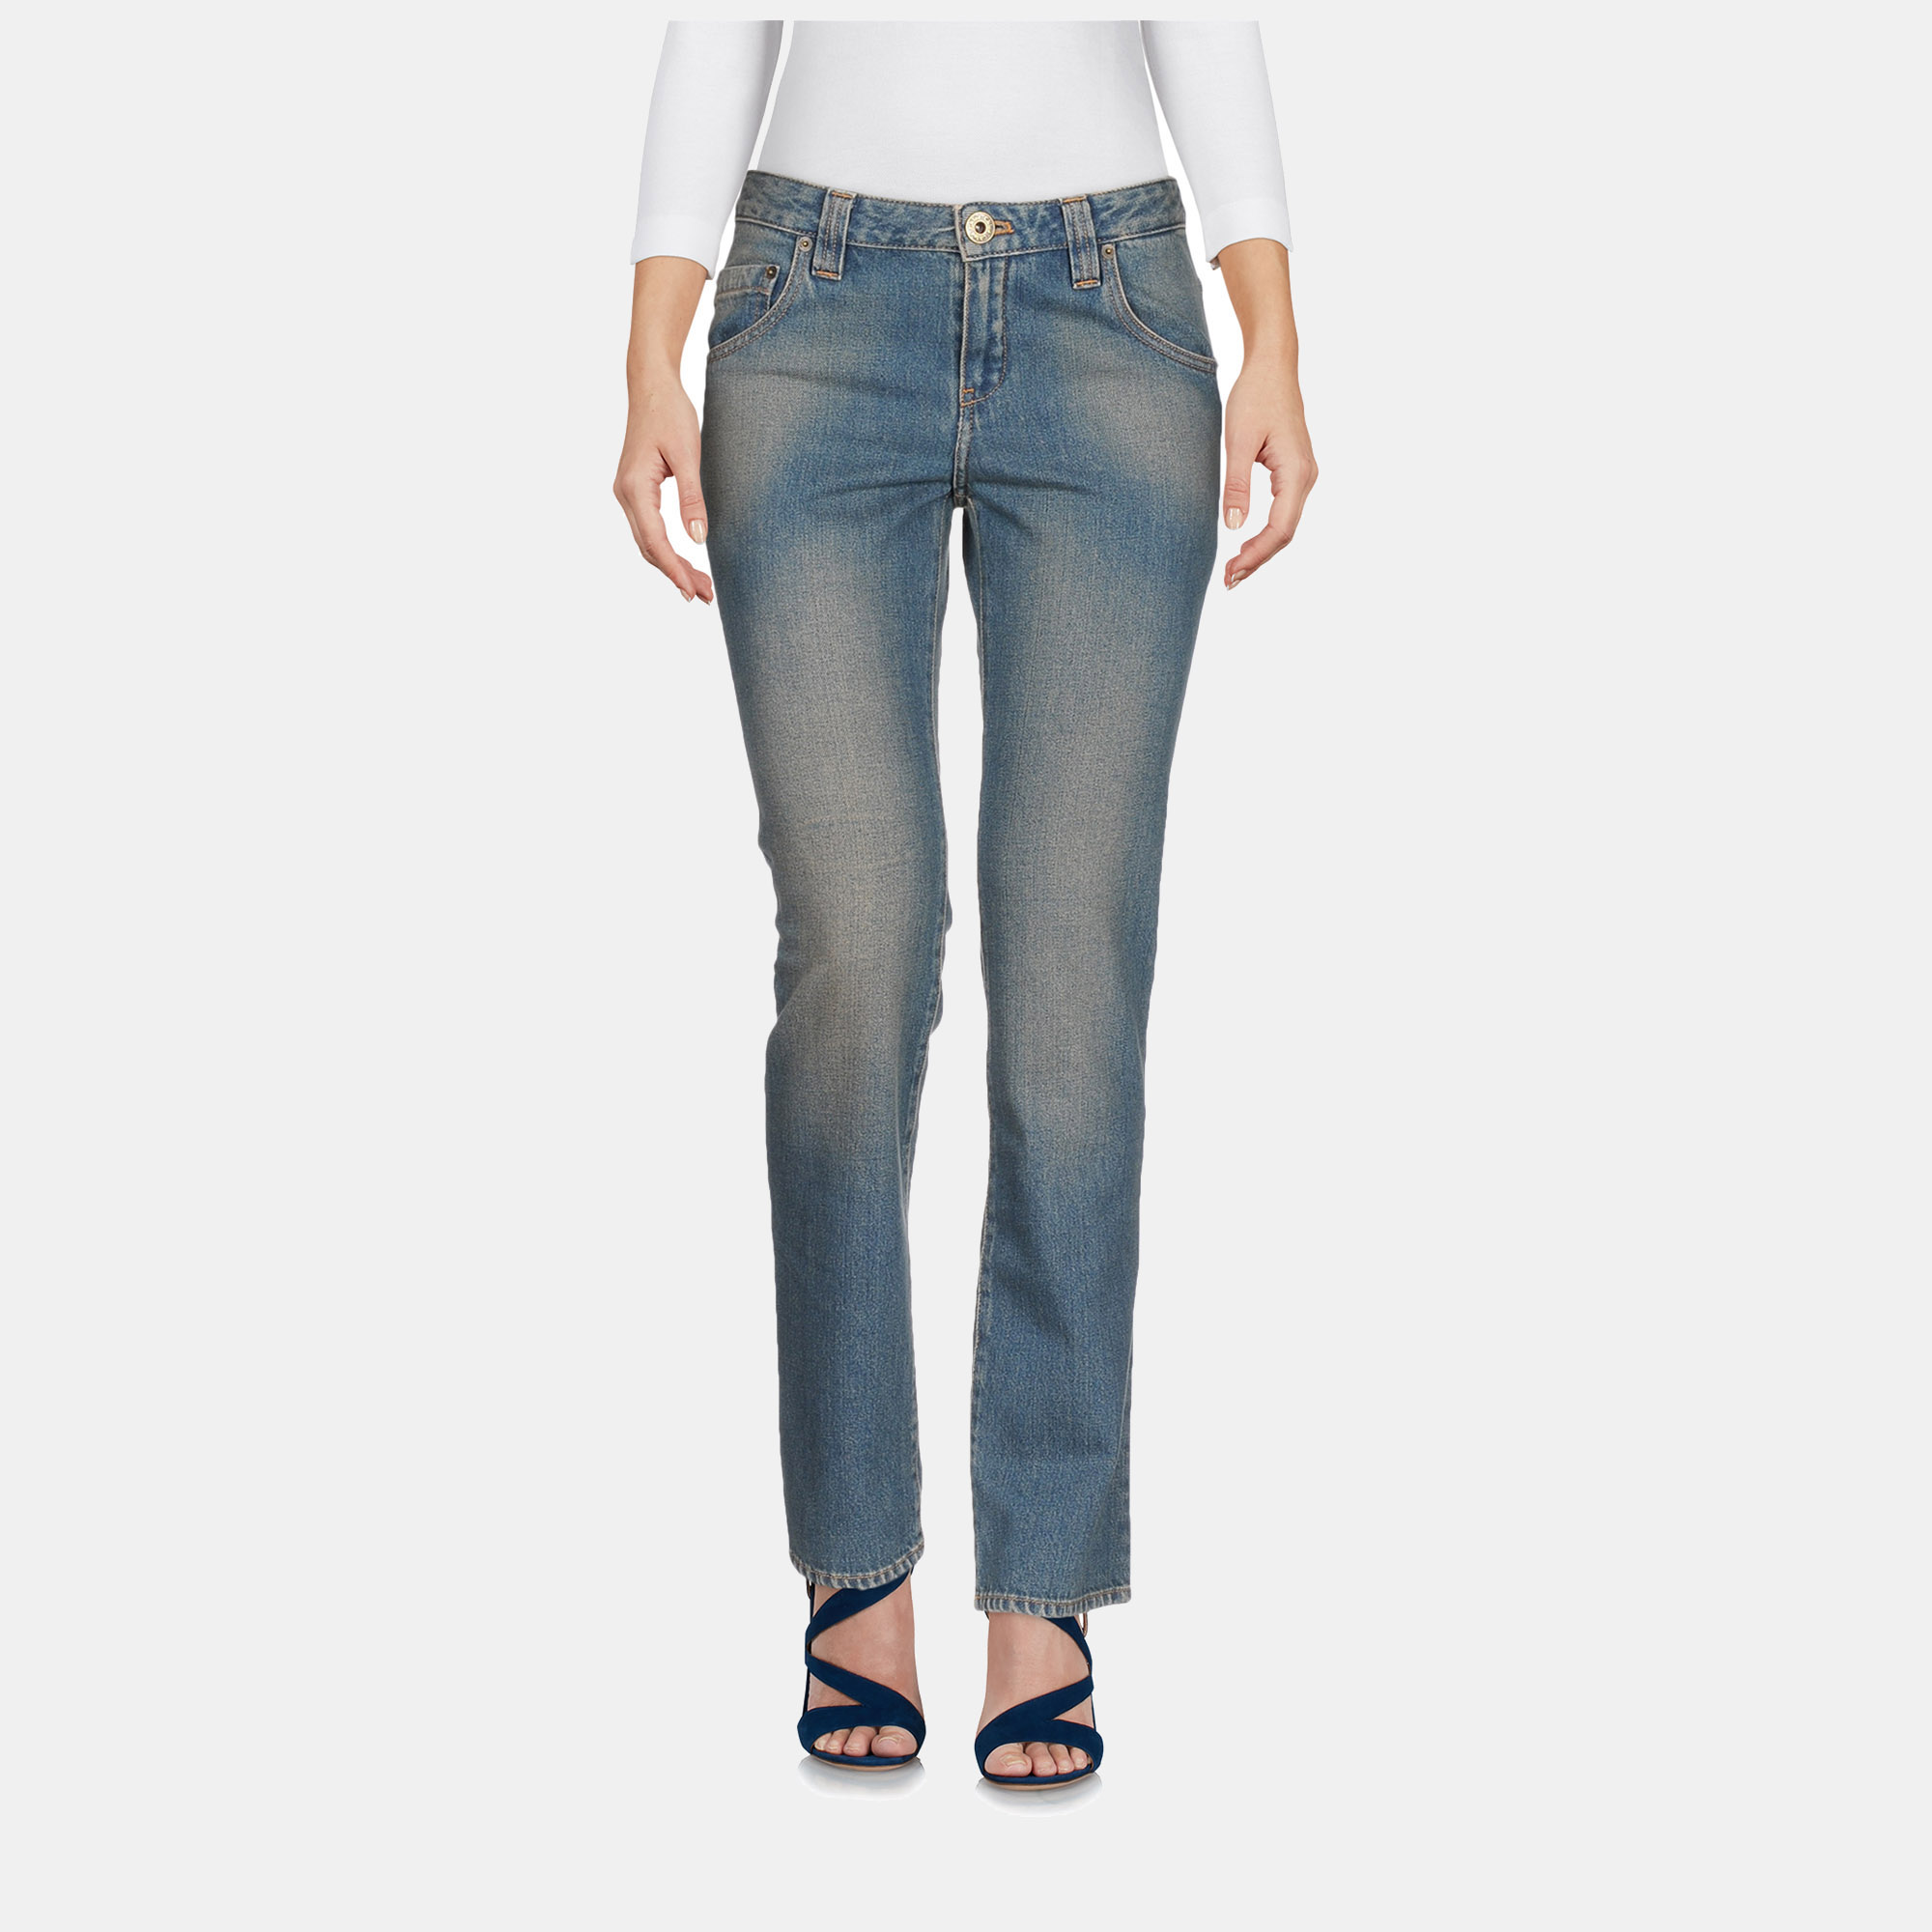 Chloe blue denim jeans size 40